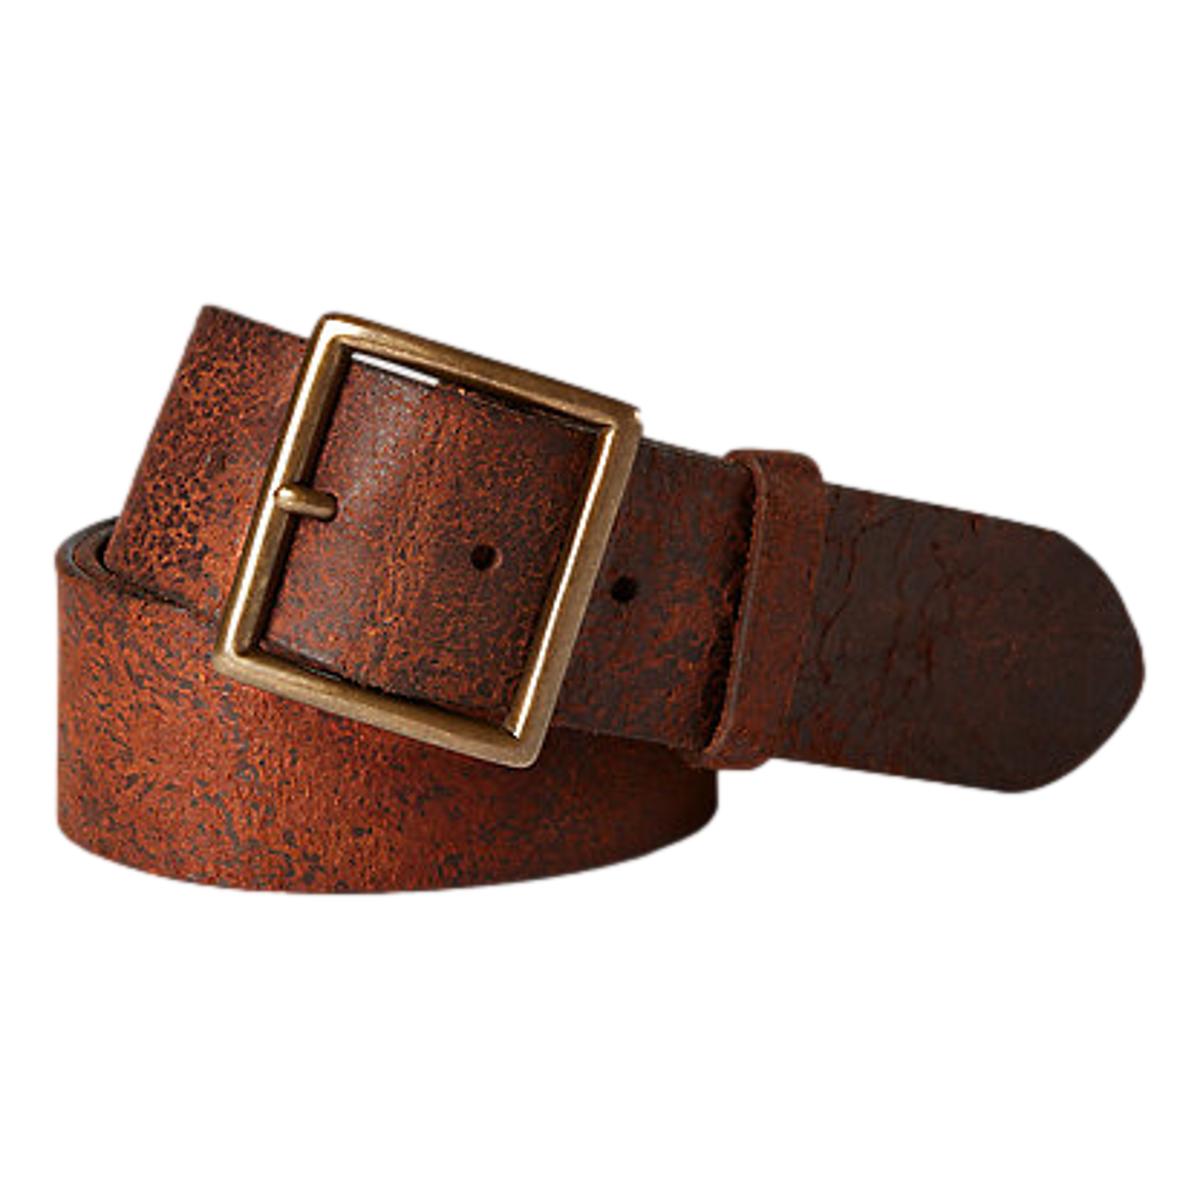 Distressed Leather Belt Distressed Tan - Belts